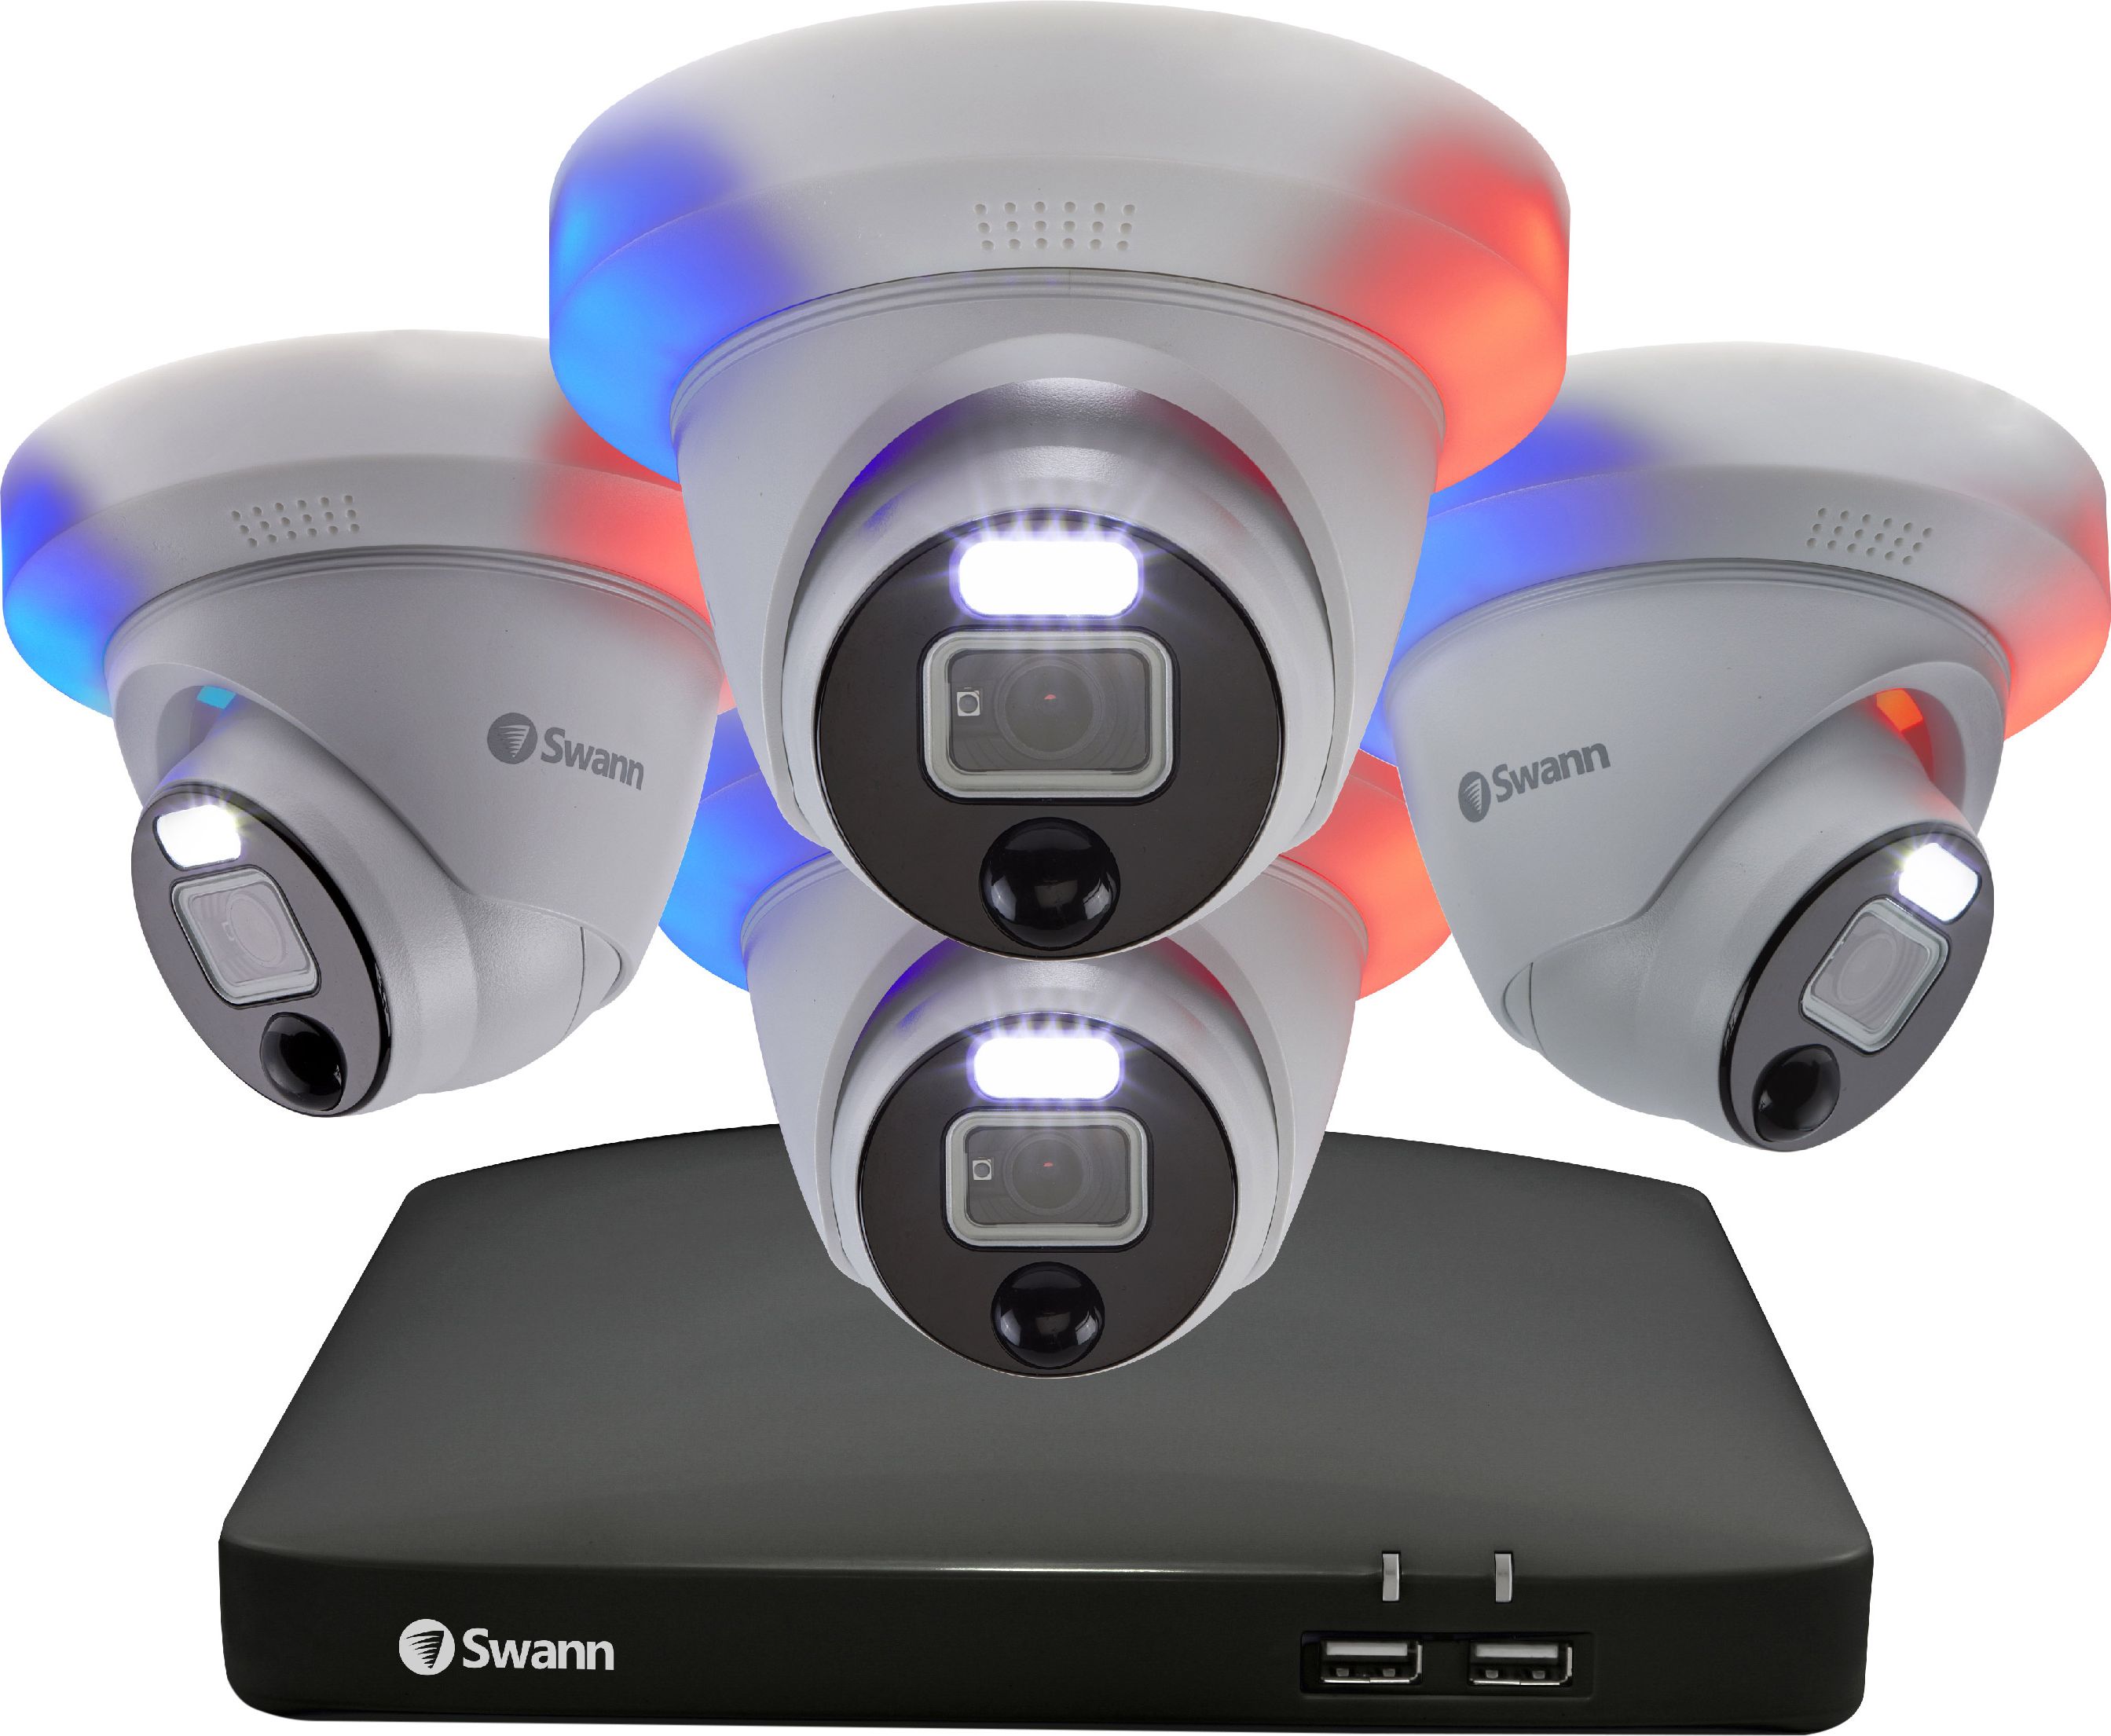 Swann Enforcer 4 Camera 8 Channel DVR Security System Full HD 1080p Smart Home Security Camera - Black, Black